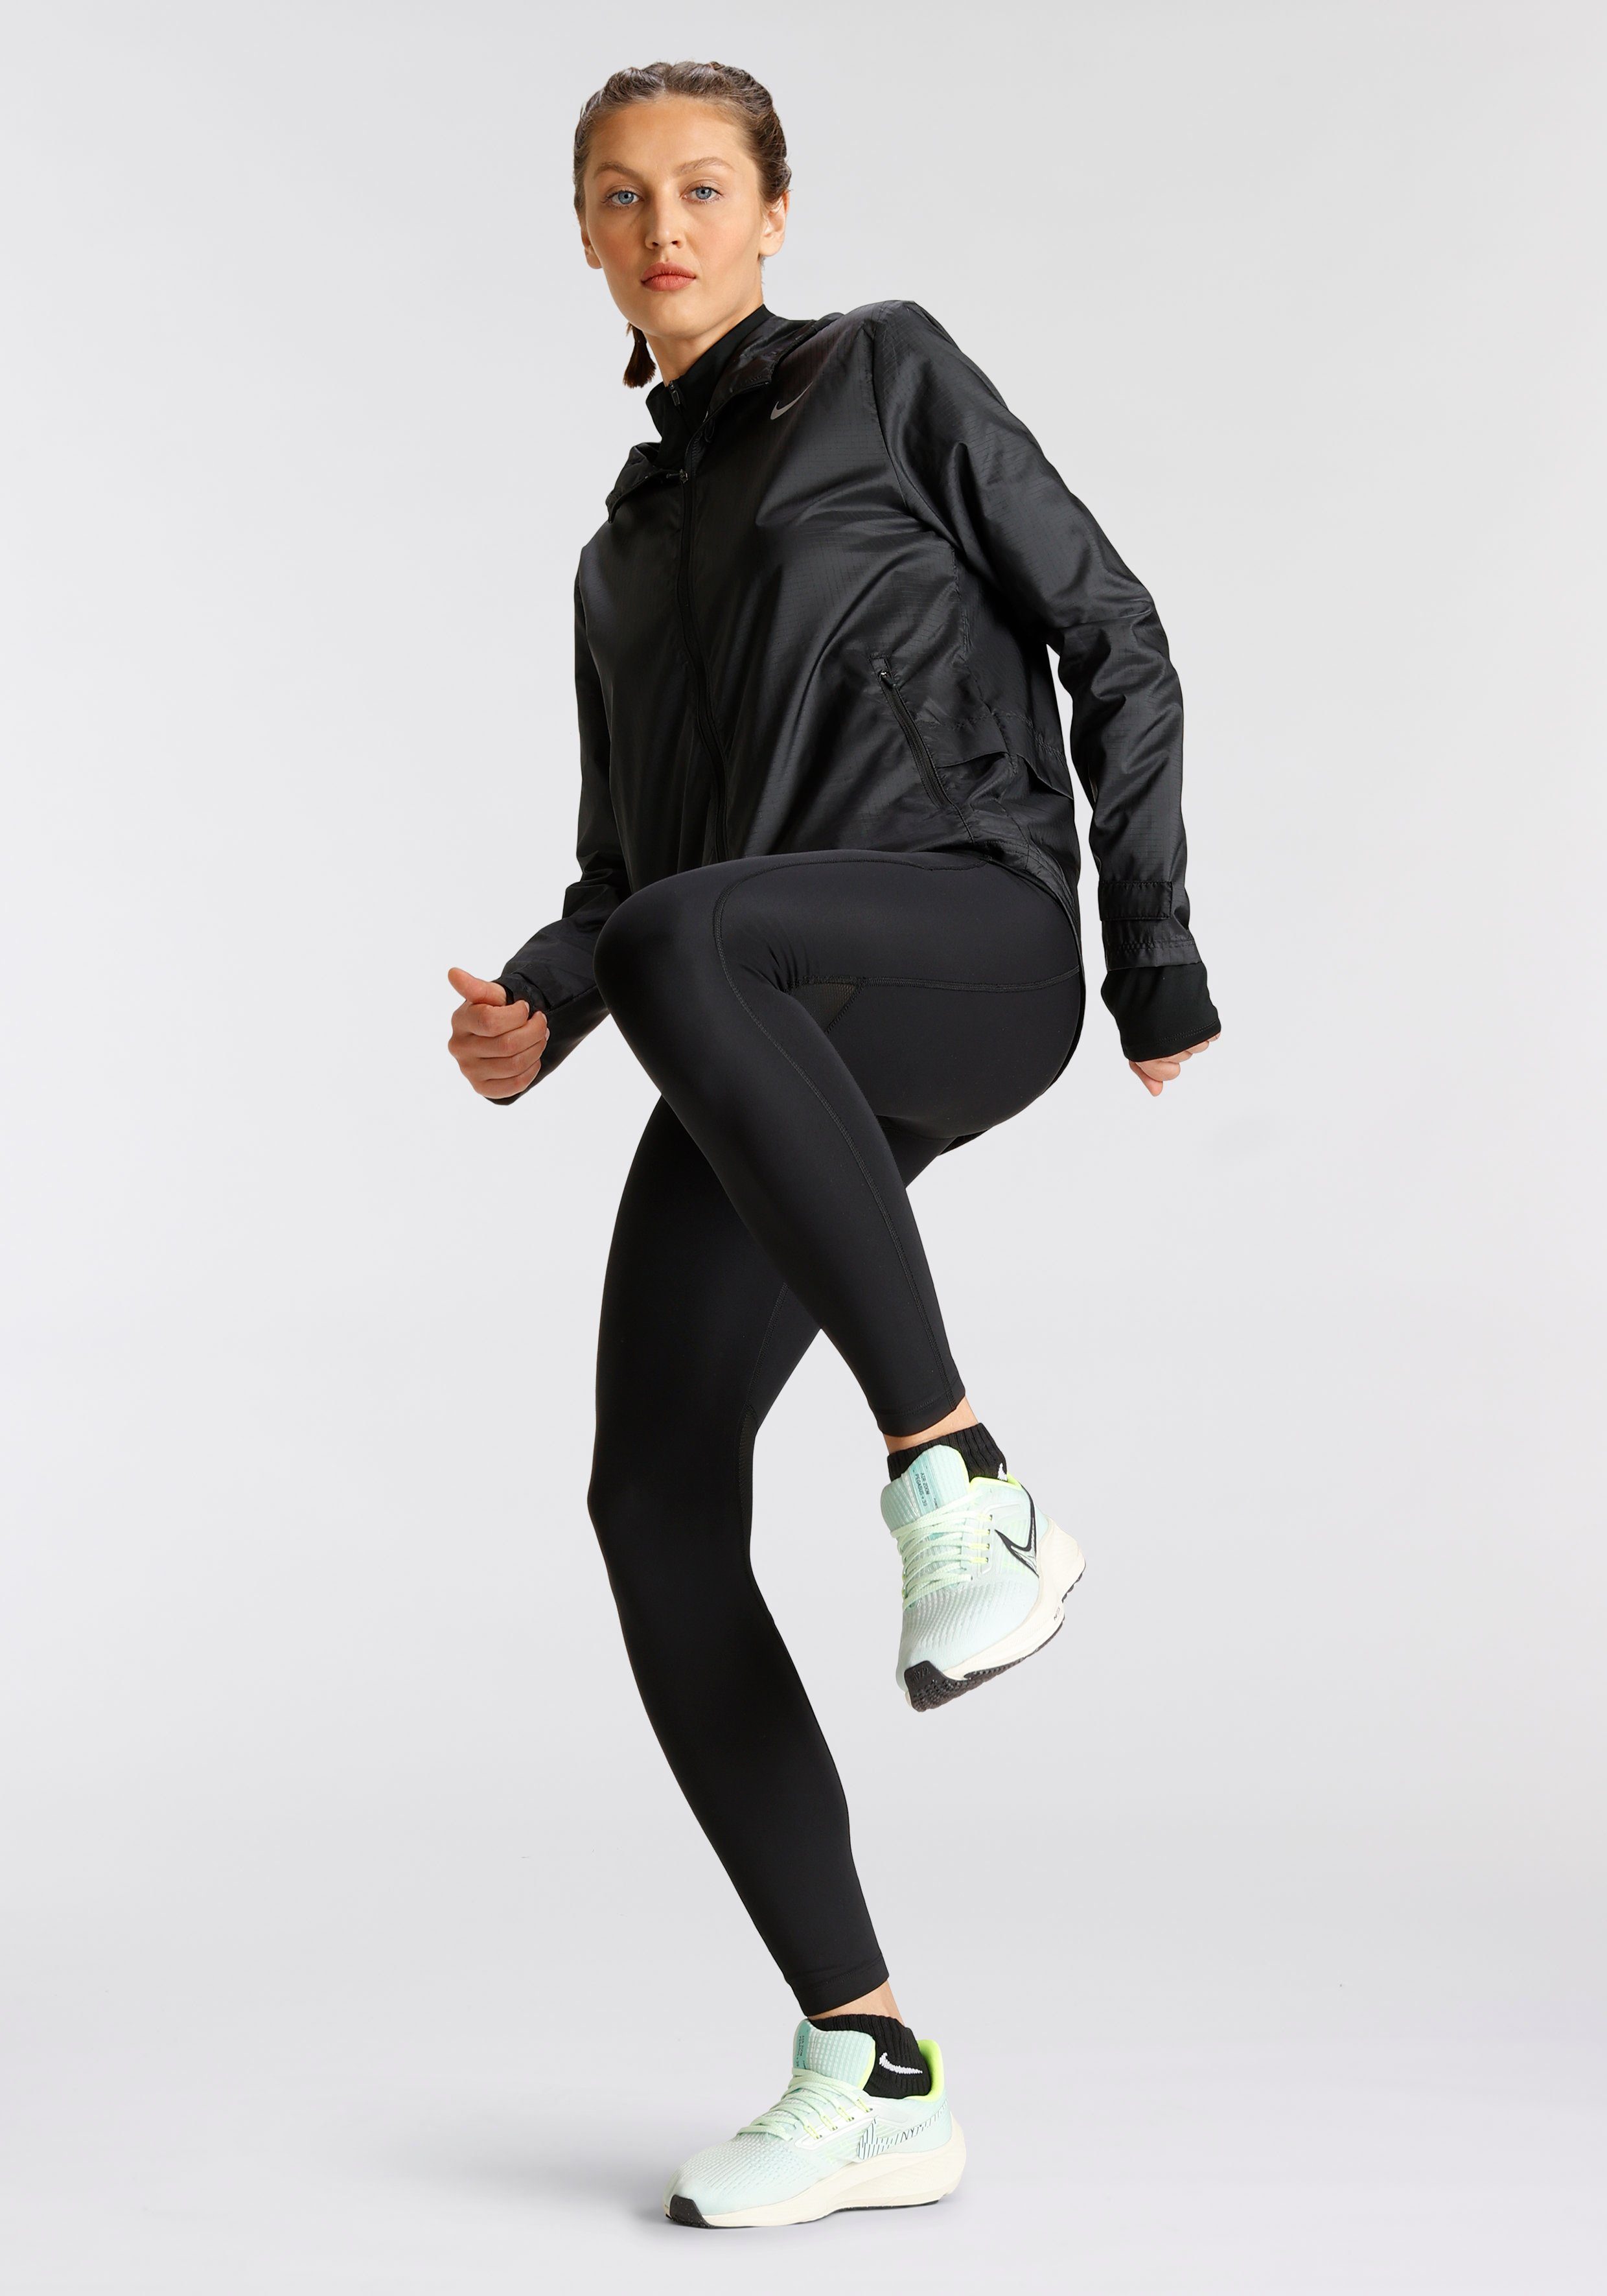 39 AIR Nike BARELY-GREEN-CAVE-PURPLE-MINT-FOAM-VOLT PEGASUS ZOOM Laufschuh